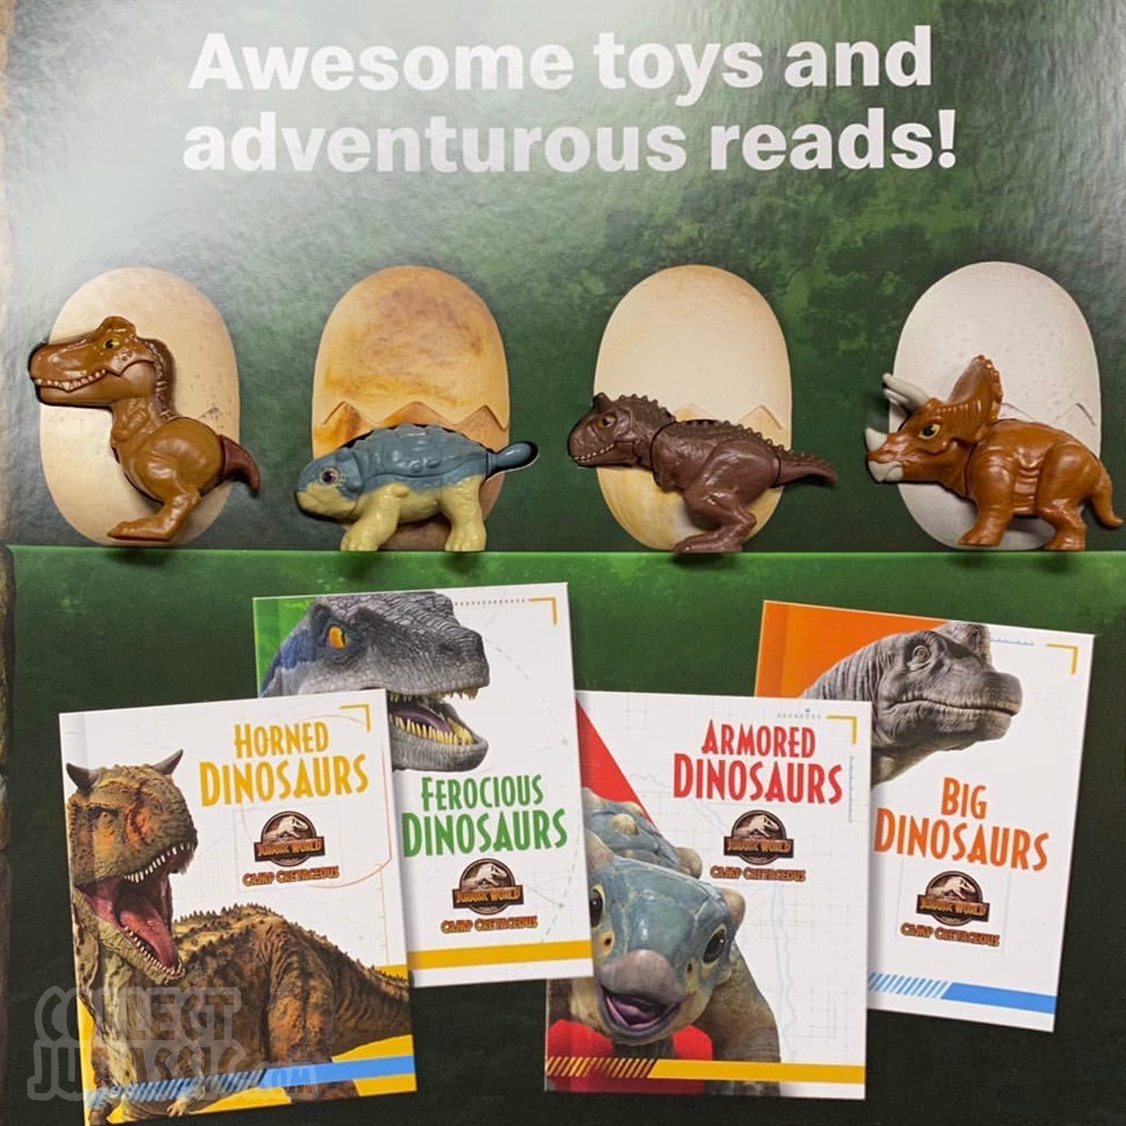 Jurassic World Camp Cretaceous McDonald's 2020 Happy Meal Toys 